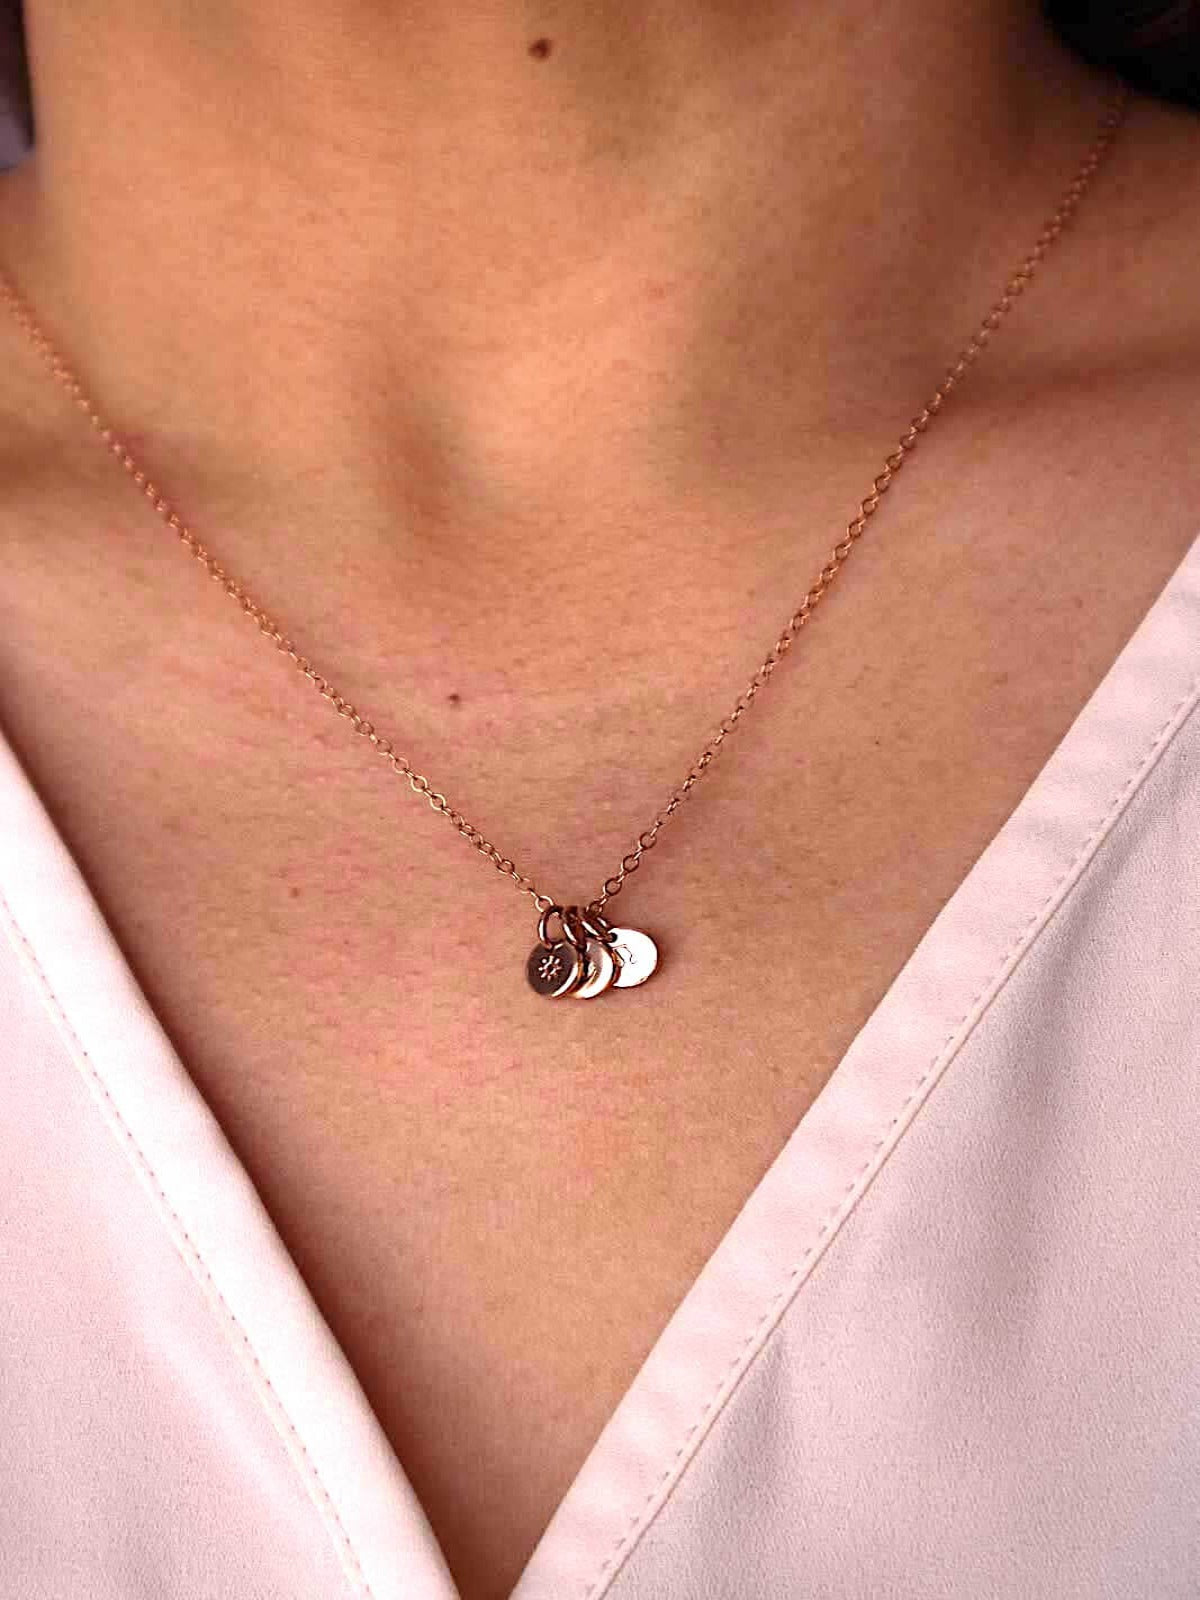 Casey - Symbols Pendant Necklace